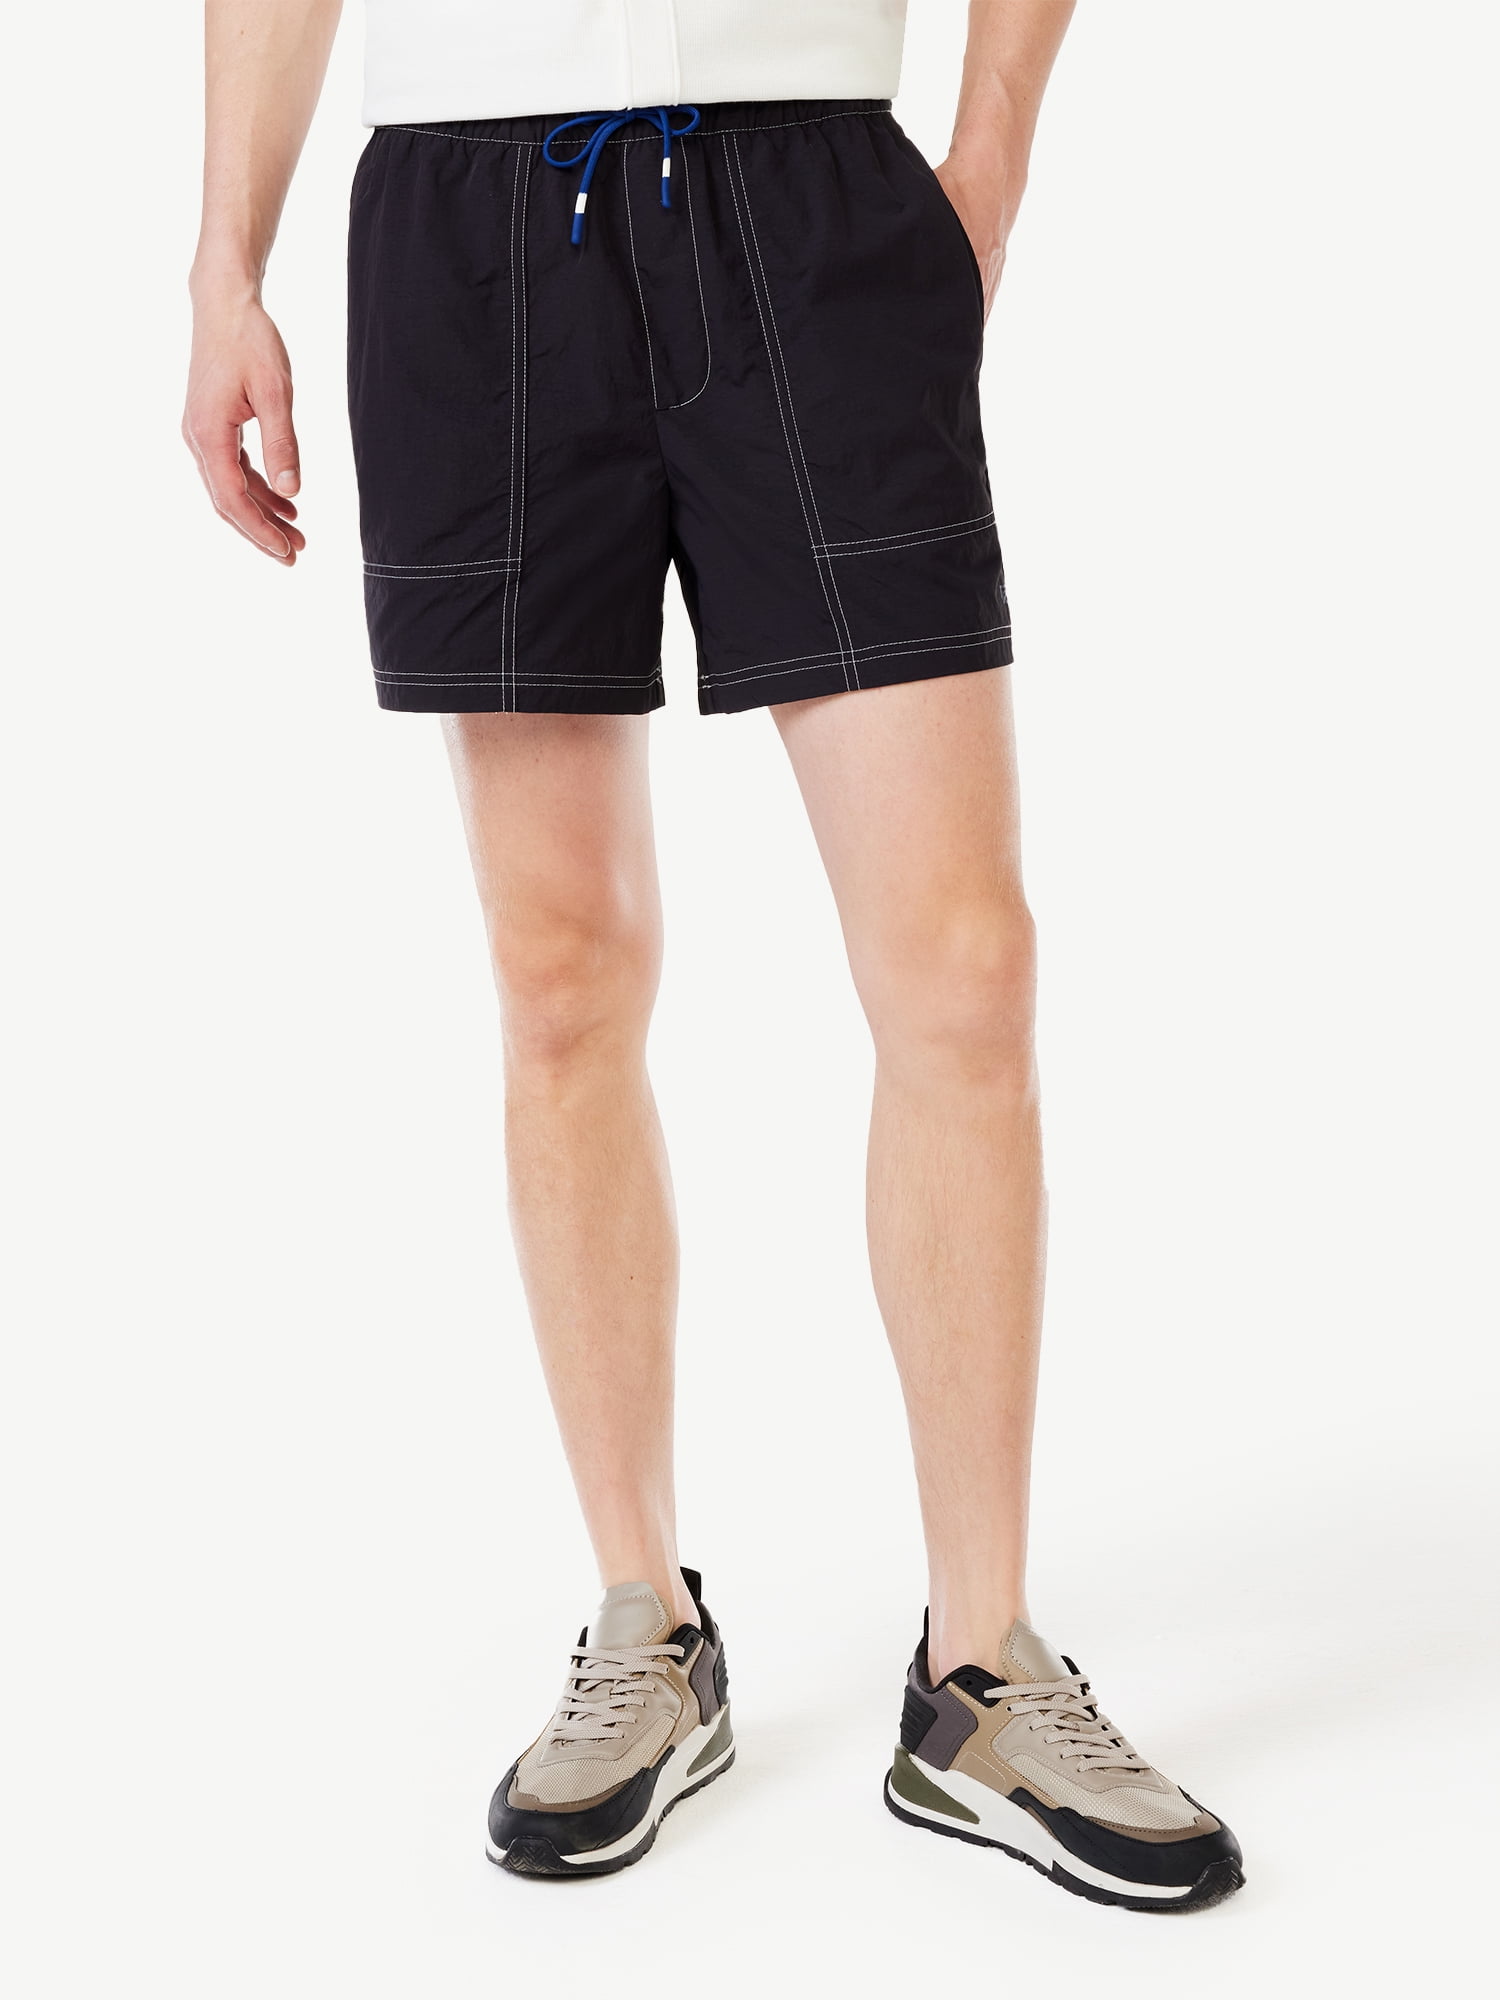 Free Assembly Men's Crinkle Nylon Shorts